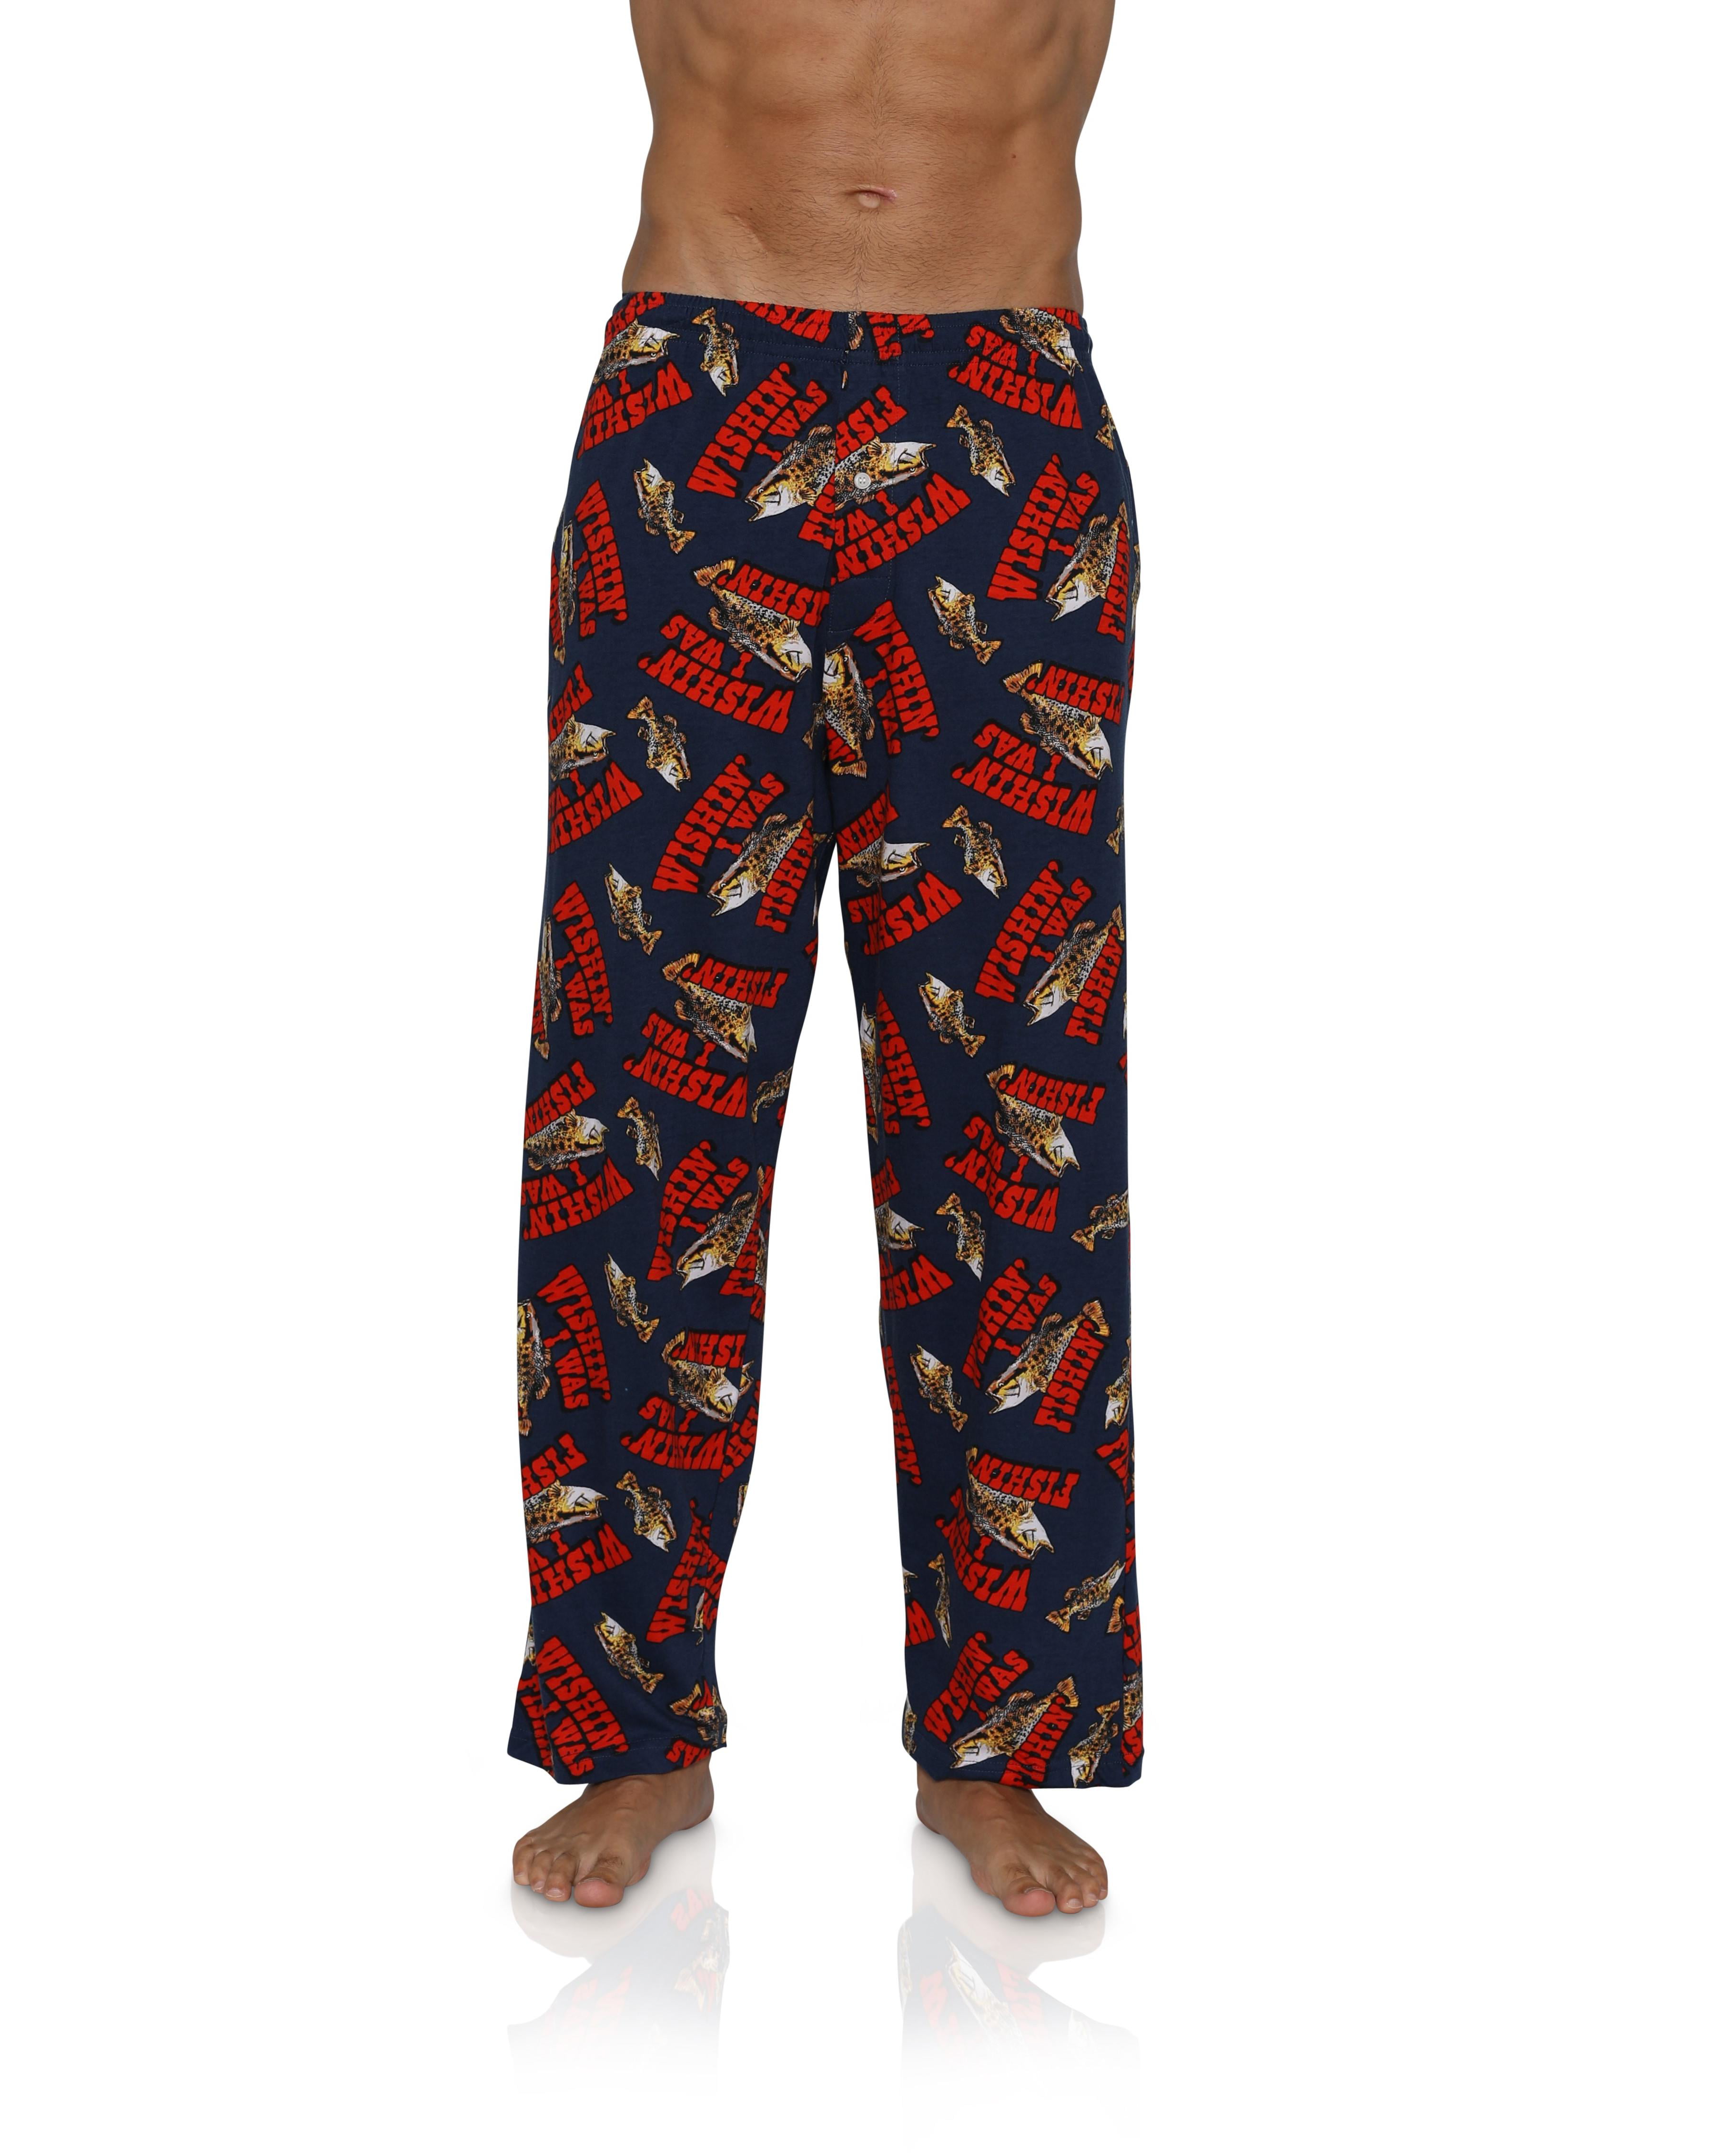 Fun Boxers - Mens Fun Pants Lounge Pajama Pants Boxers Adult Sleepwear ...